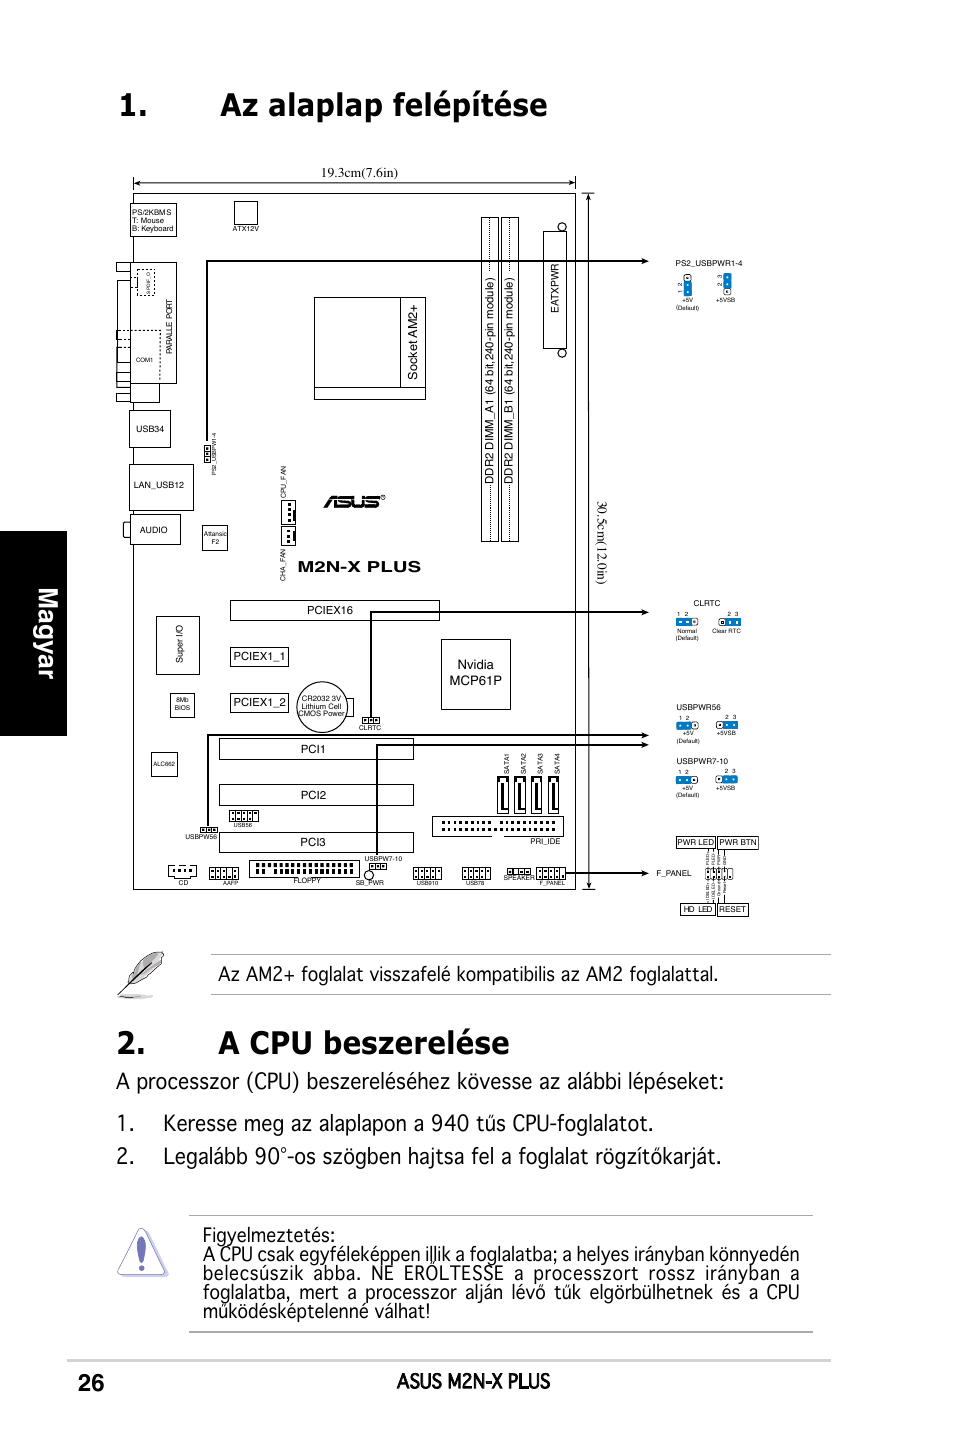 Az alaplap felépítése 2. a cpu beszerelése, Magyar, Asus m2n-x plus | Asus  M2N-X PLUS User Manual | Page 26 / 38 | Original mode